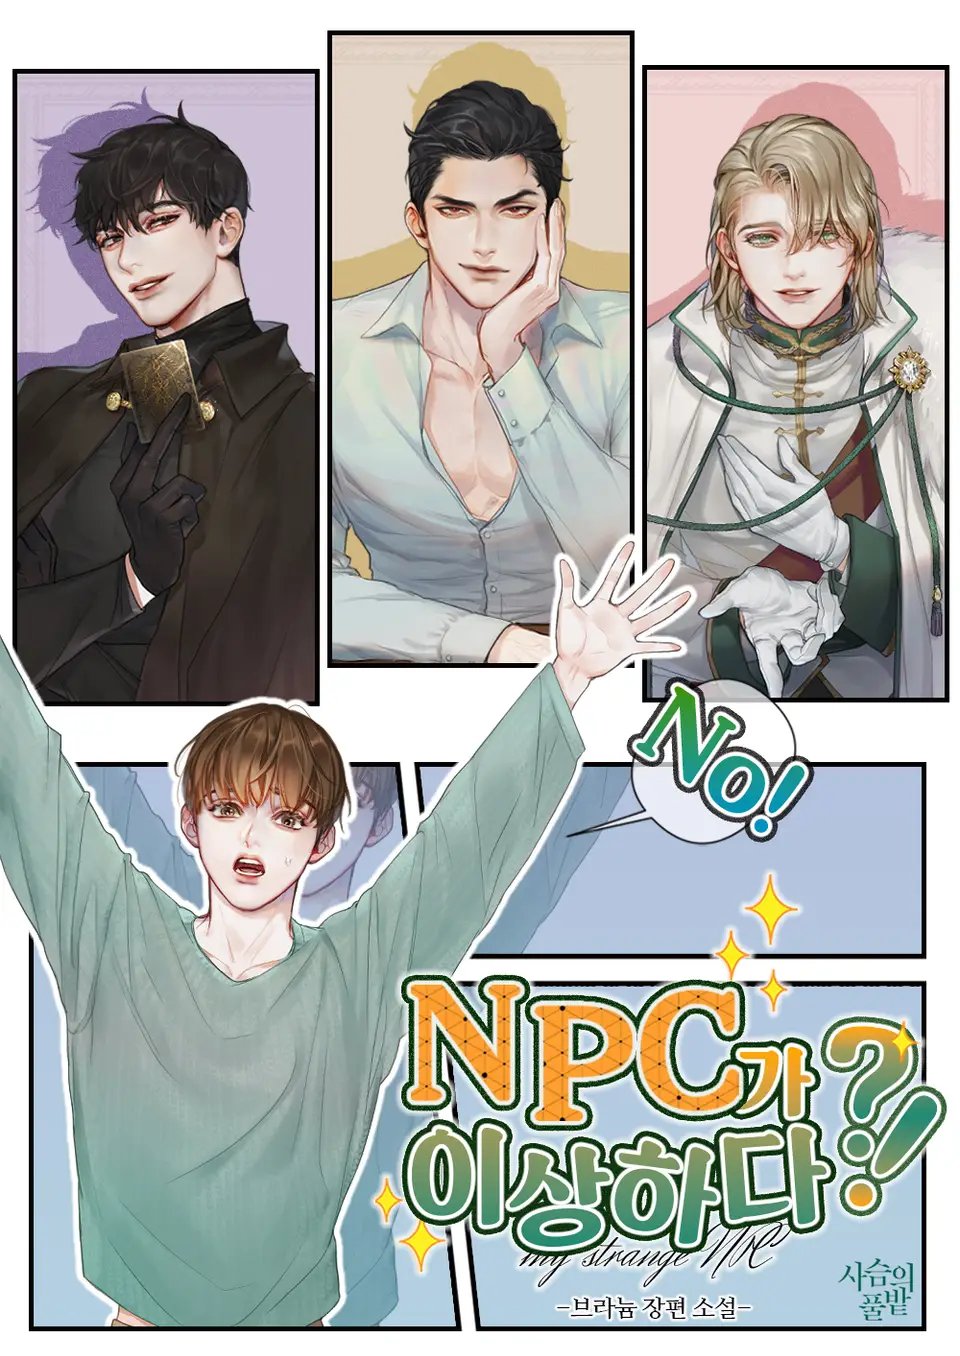 The NPCs Are Weird?!